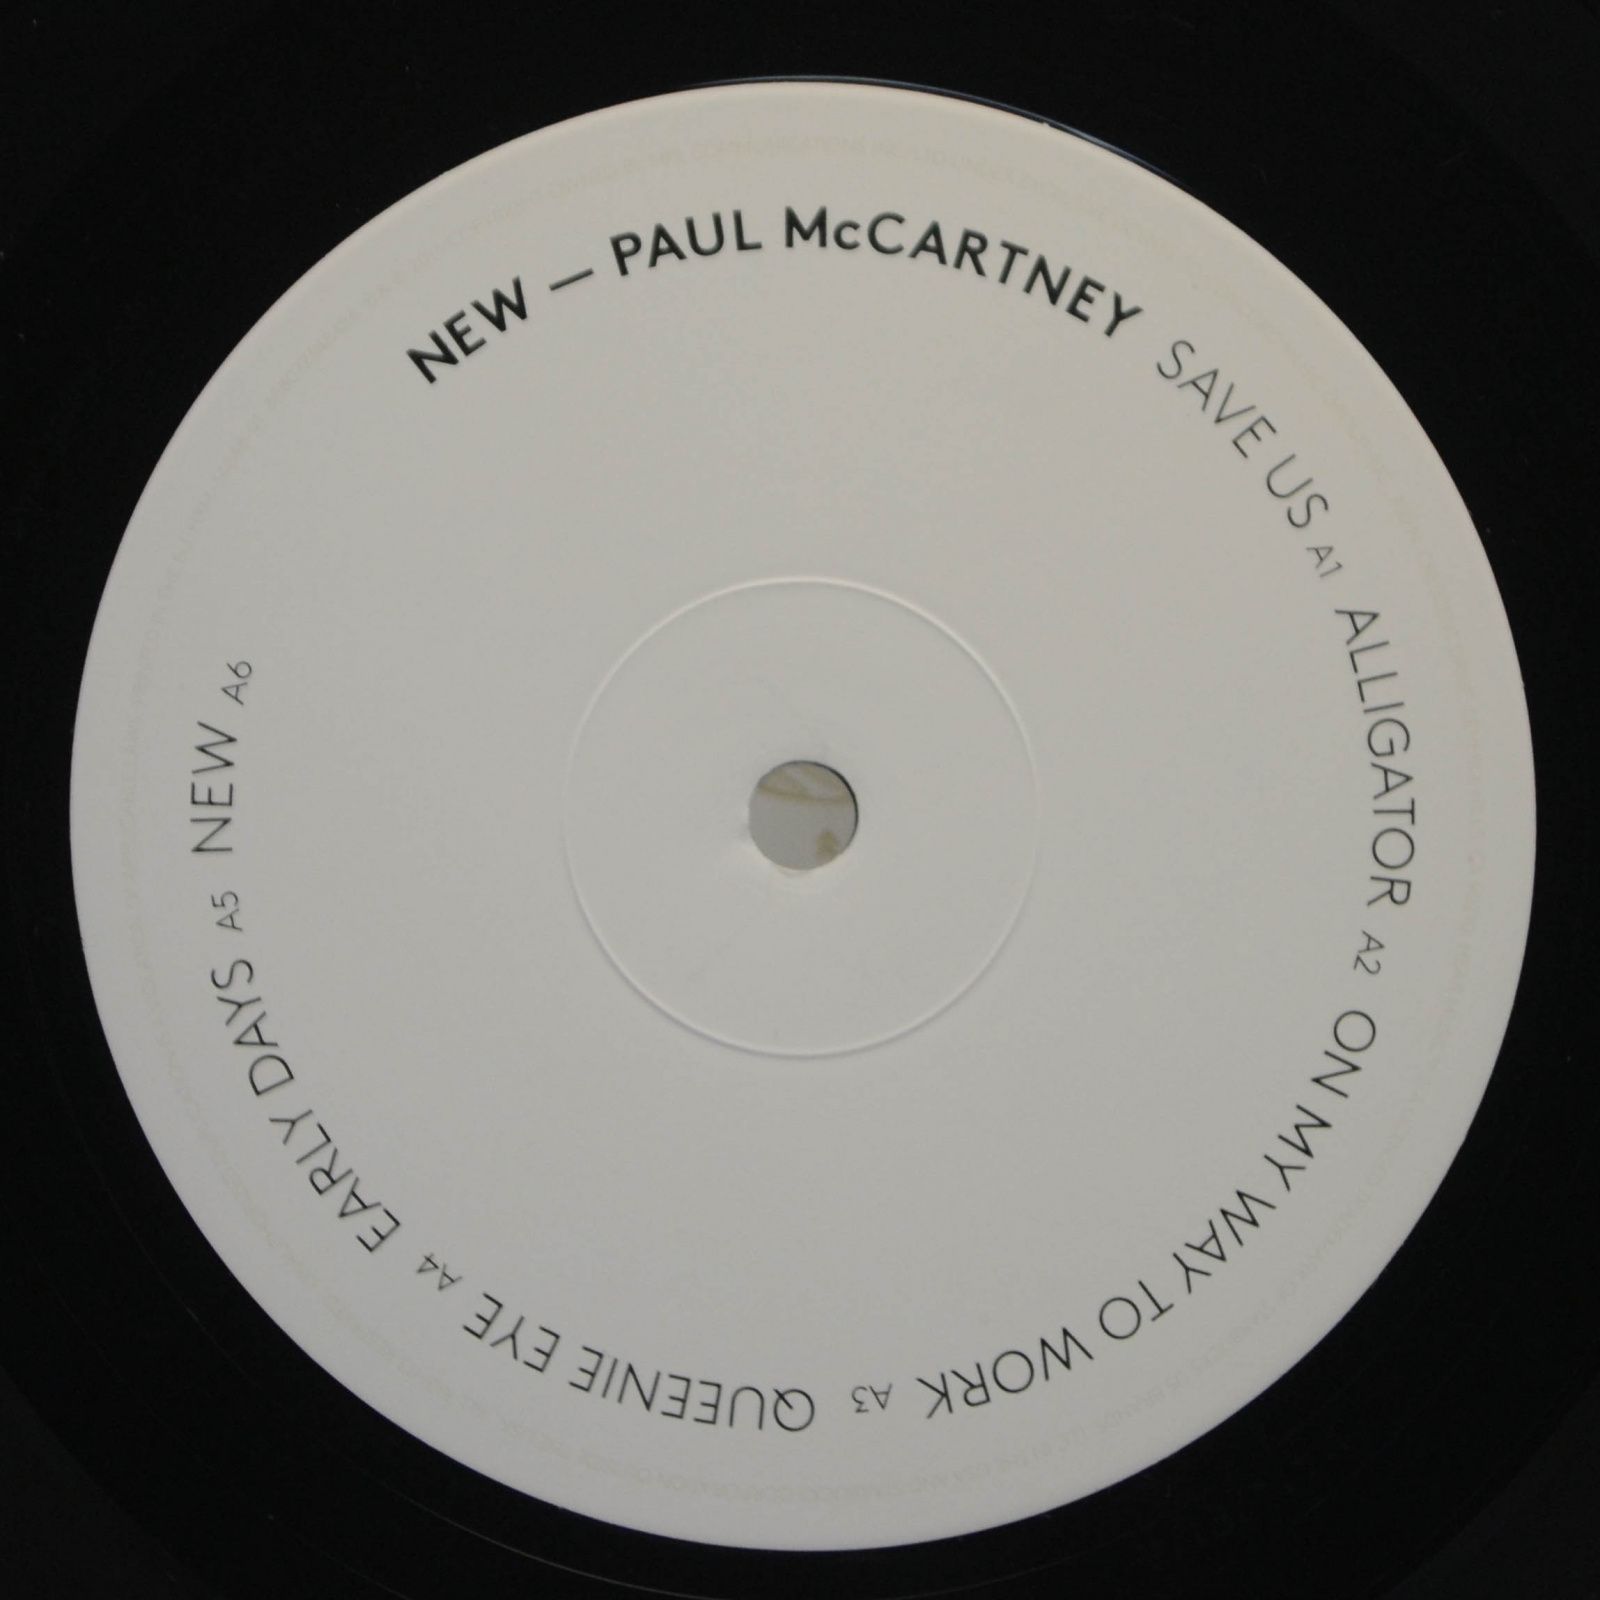 Paul McCartney — New, 2013